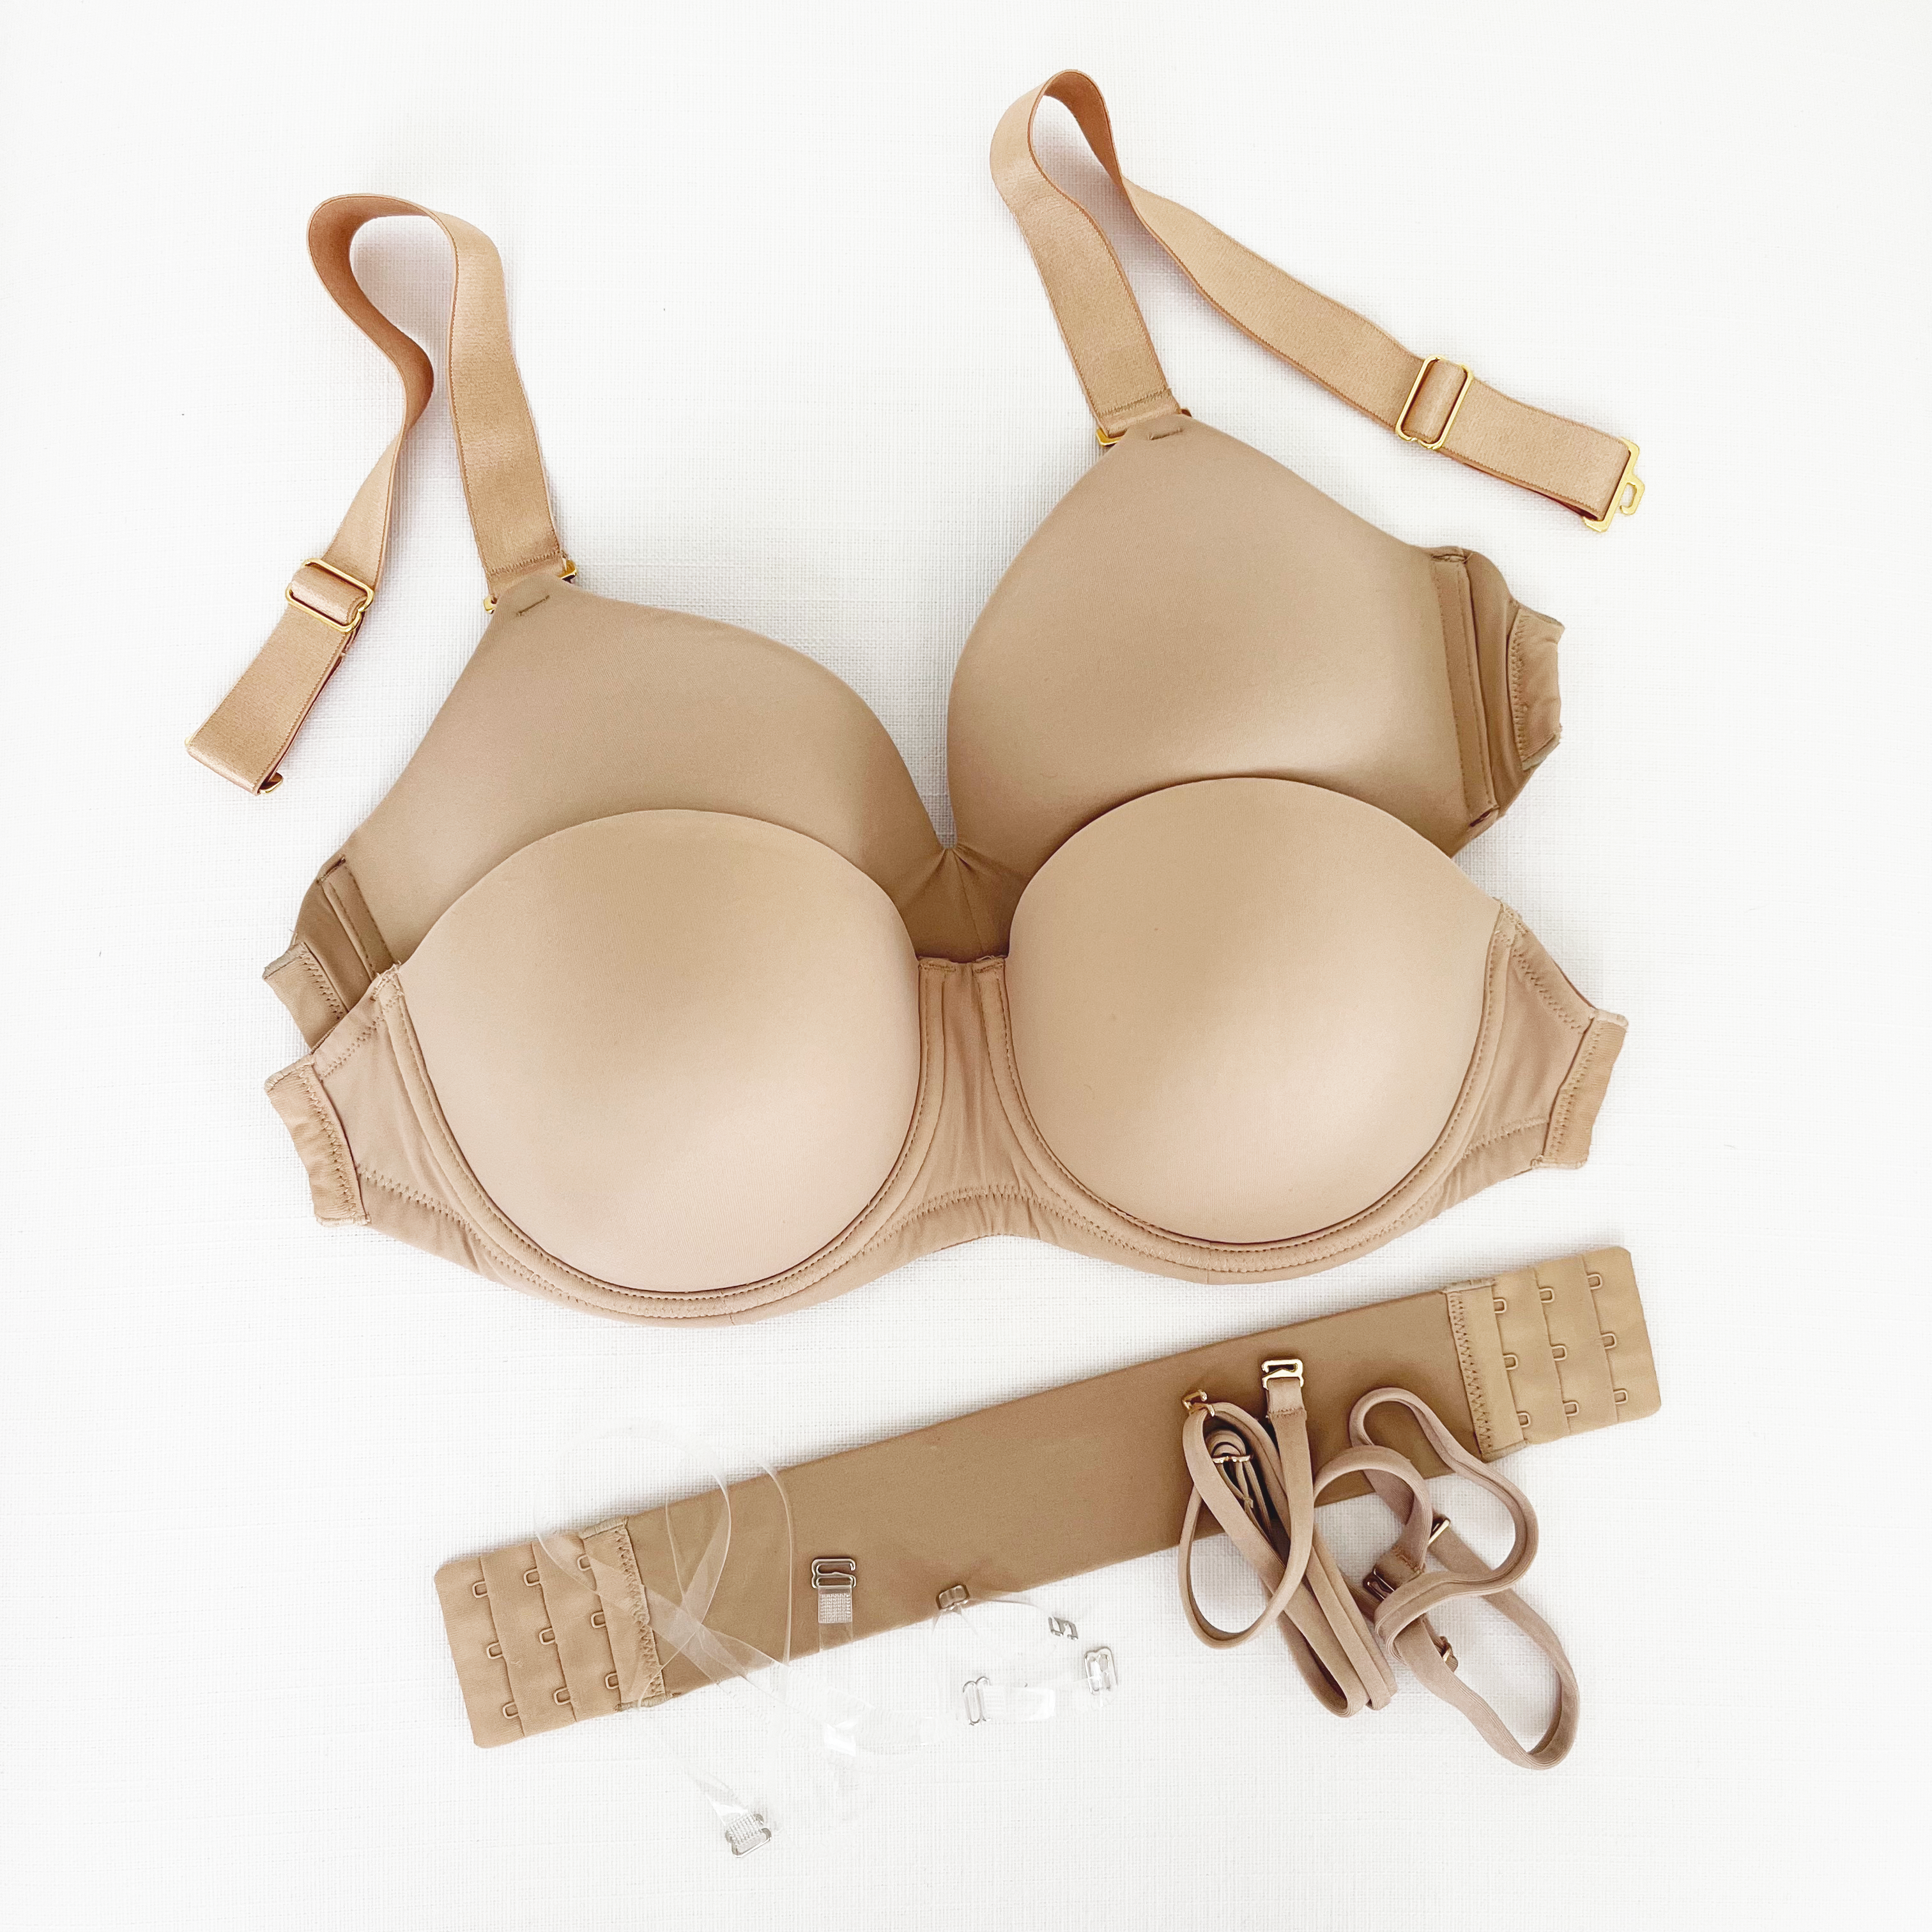 Bra Straps.com Online Store: Evolution bra, Beaded bra straps, Jewelery bra  straps, Clear bra straps by Margarita Couture